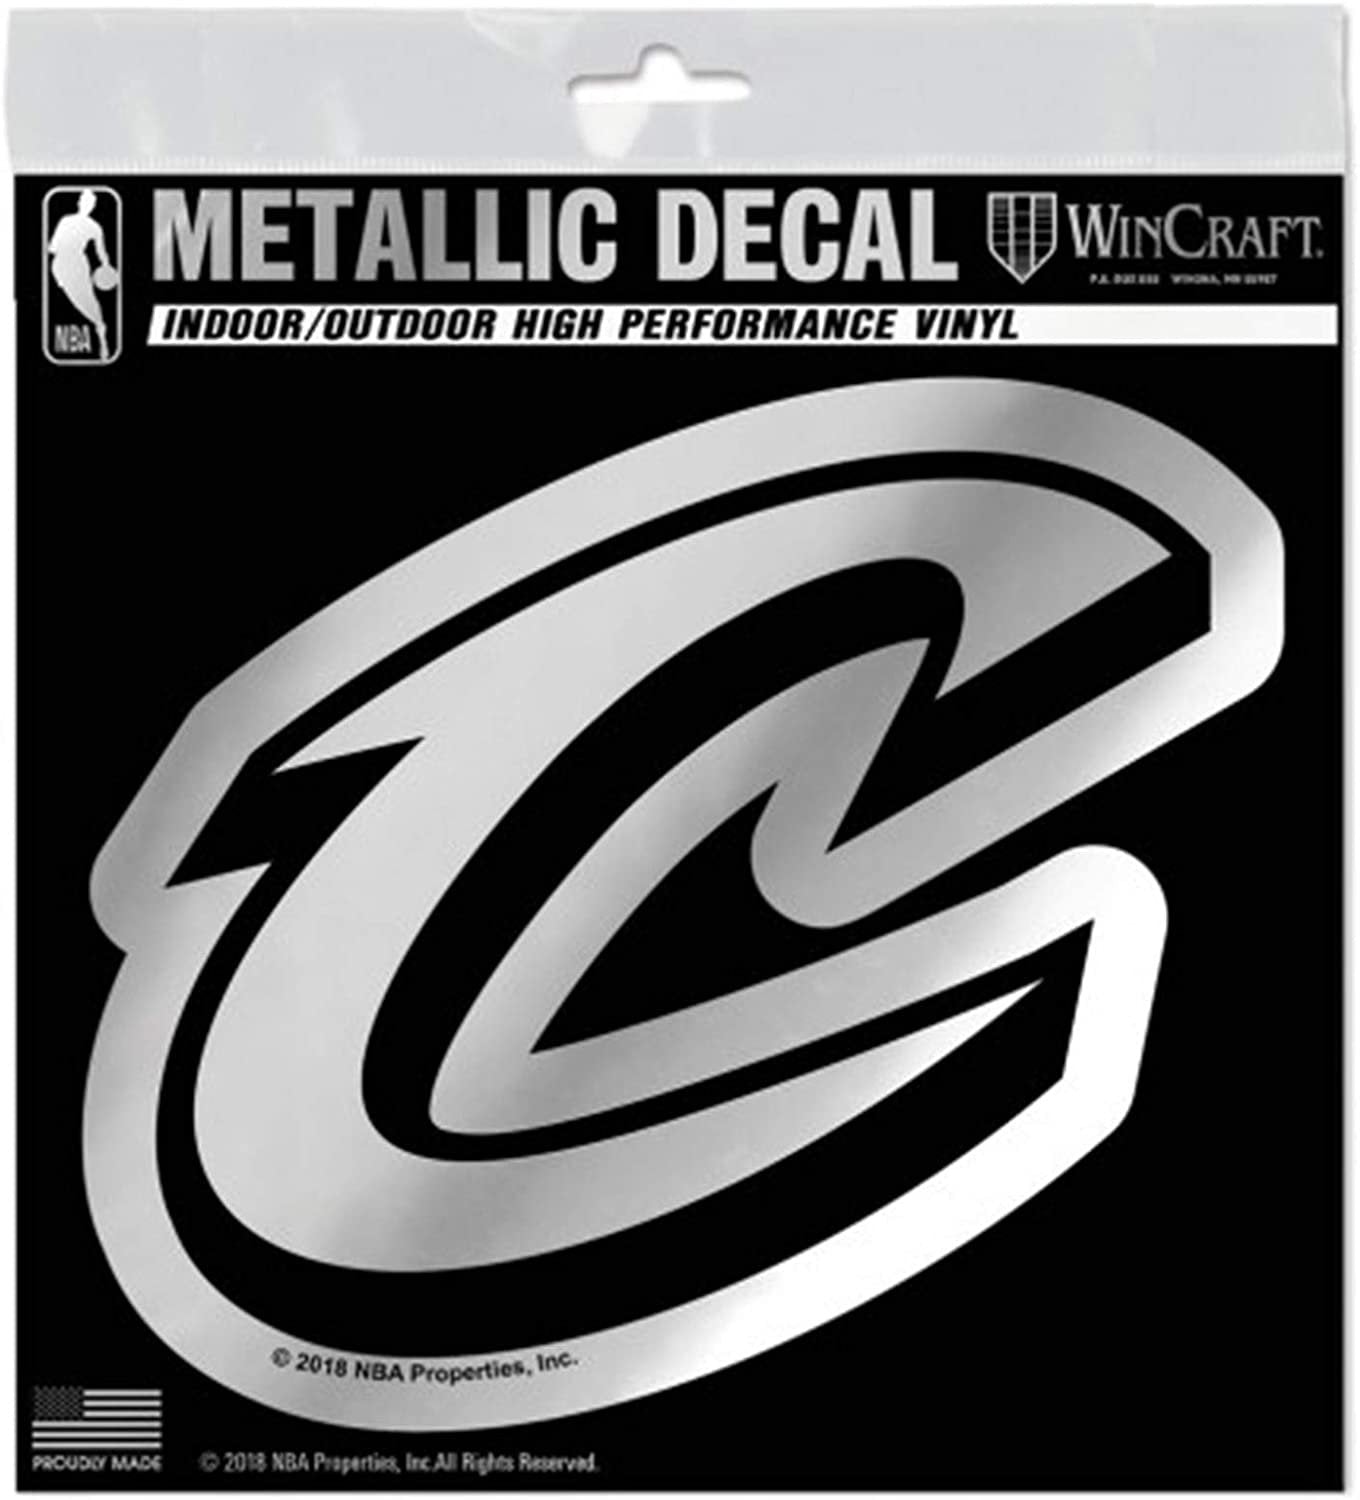 Cleveland Cavaliers 6 Inch Decal Sticker, Metallic Chrome Shimmer Design